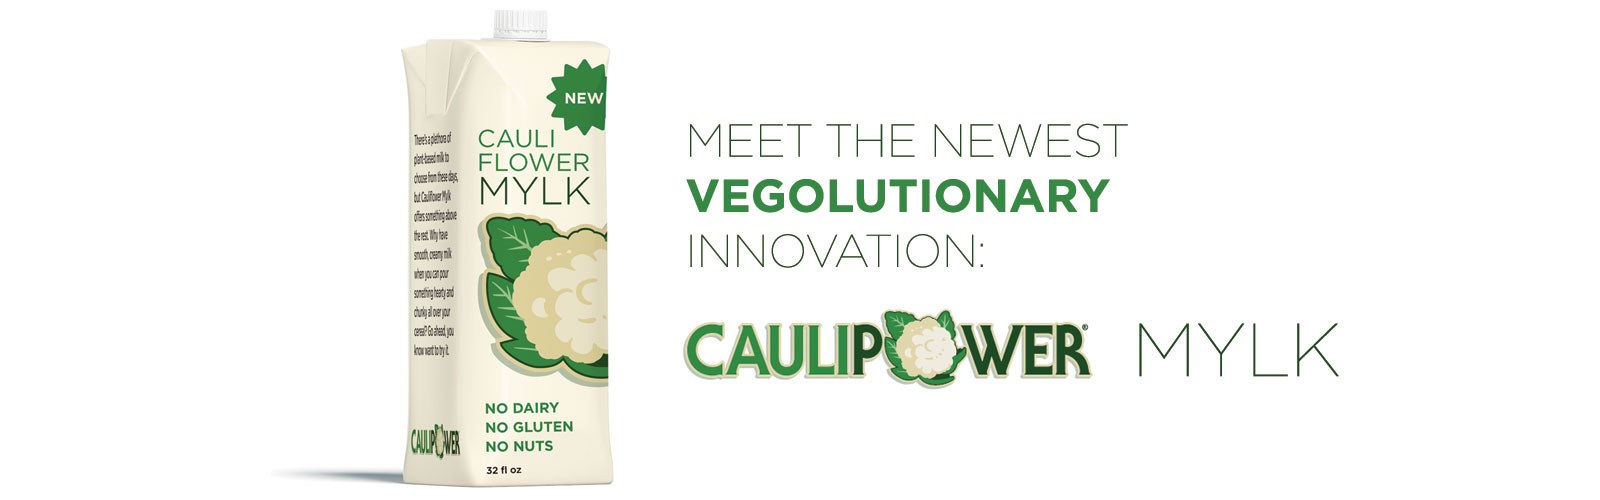 Cauliflower Plant-Based Mylk by CAULIPOWER